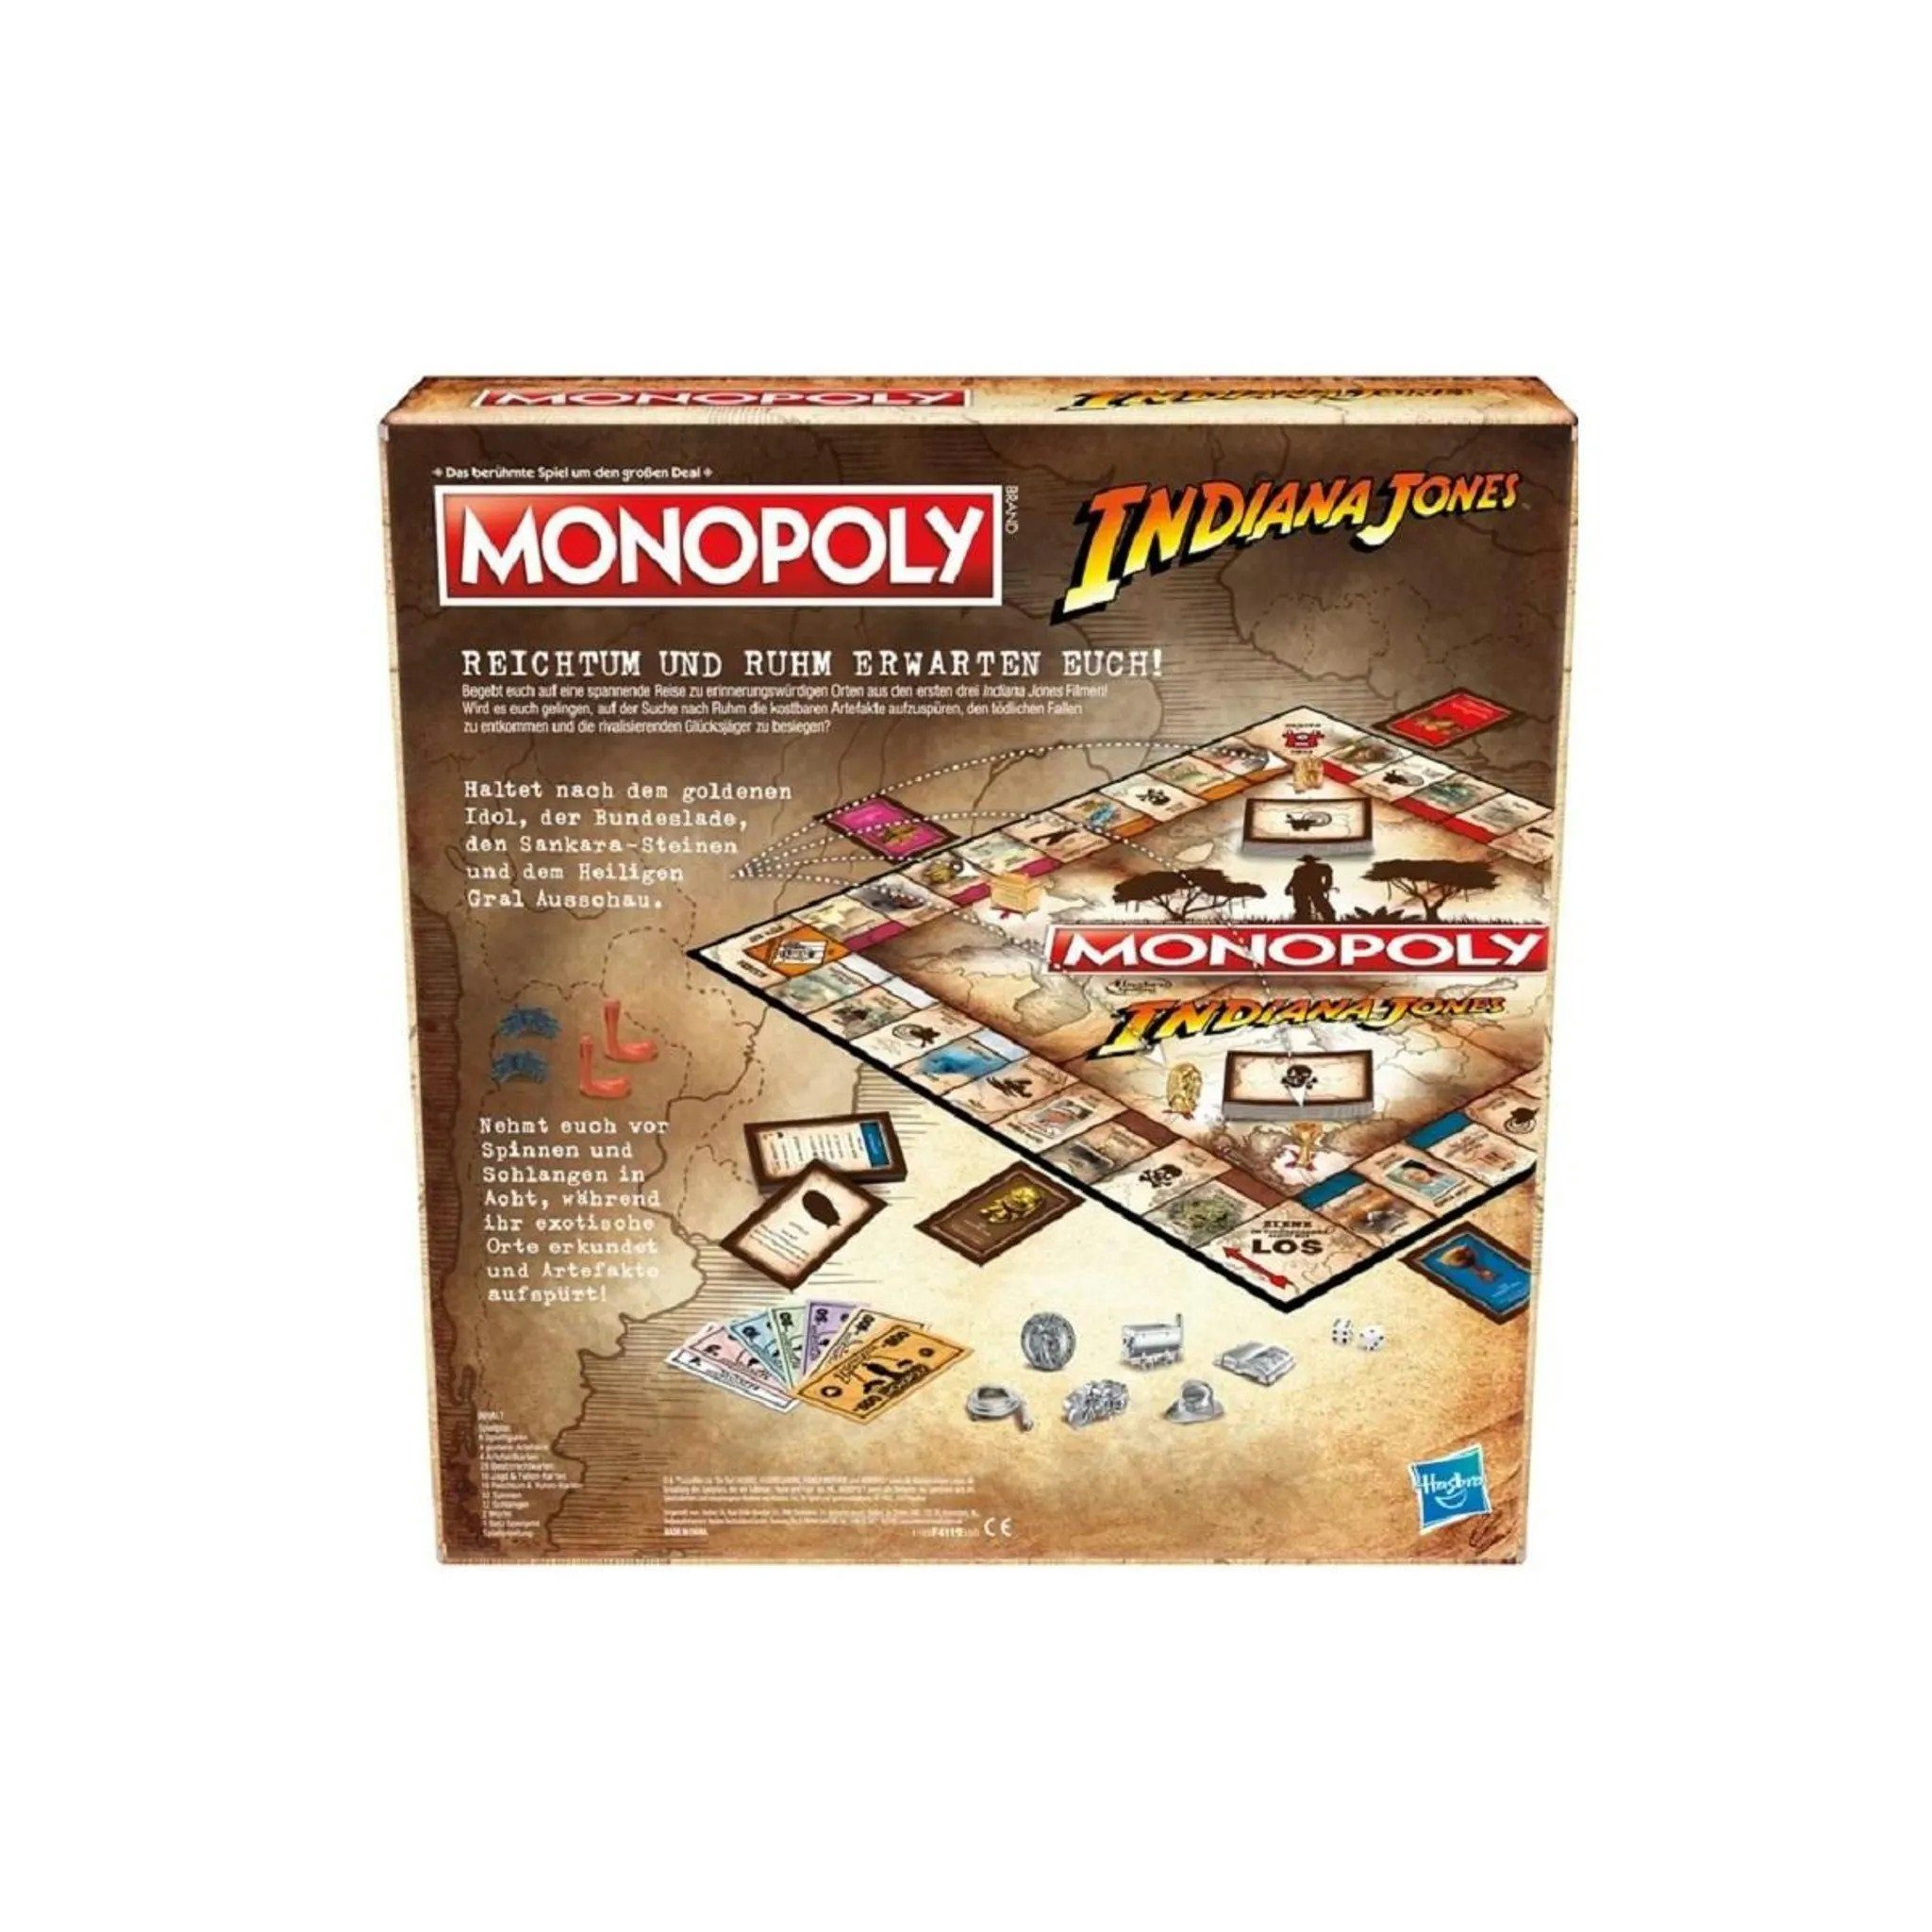 Brettspiel Spiel, Hasbro Jones Indiana Monopoly